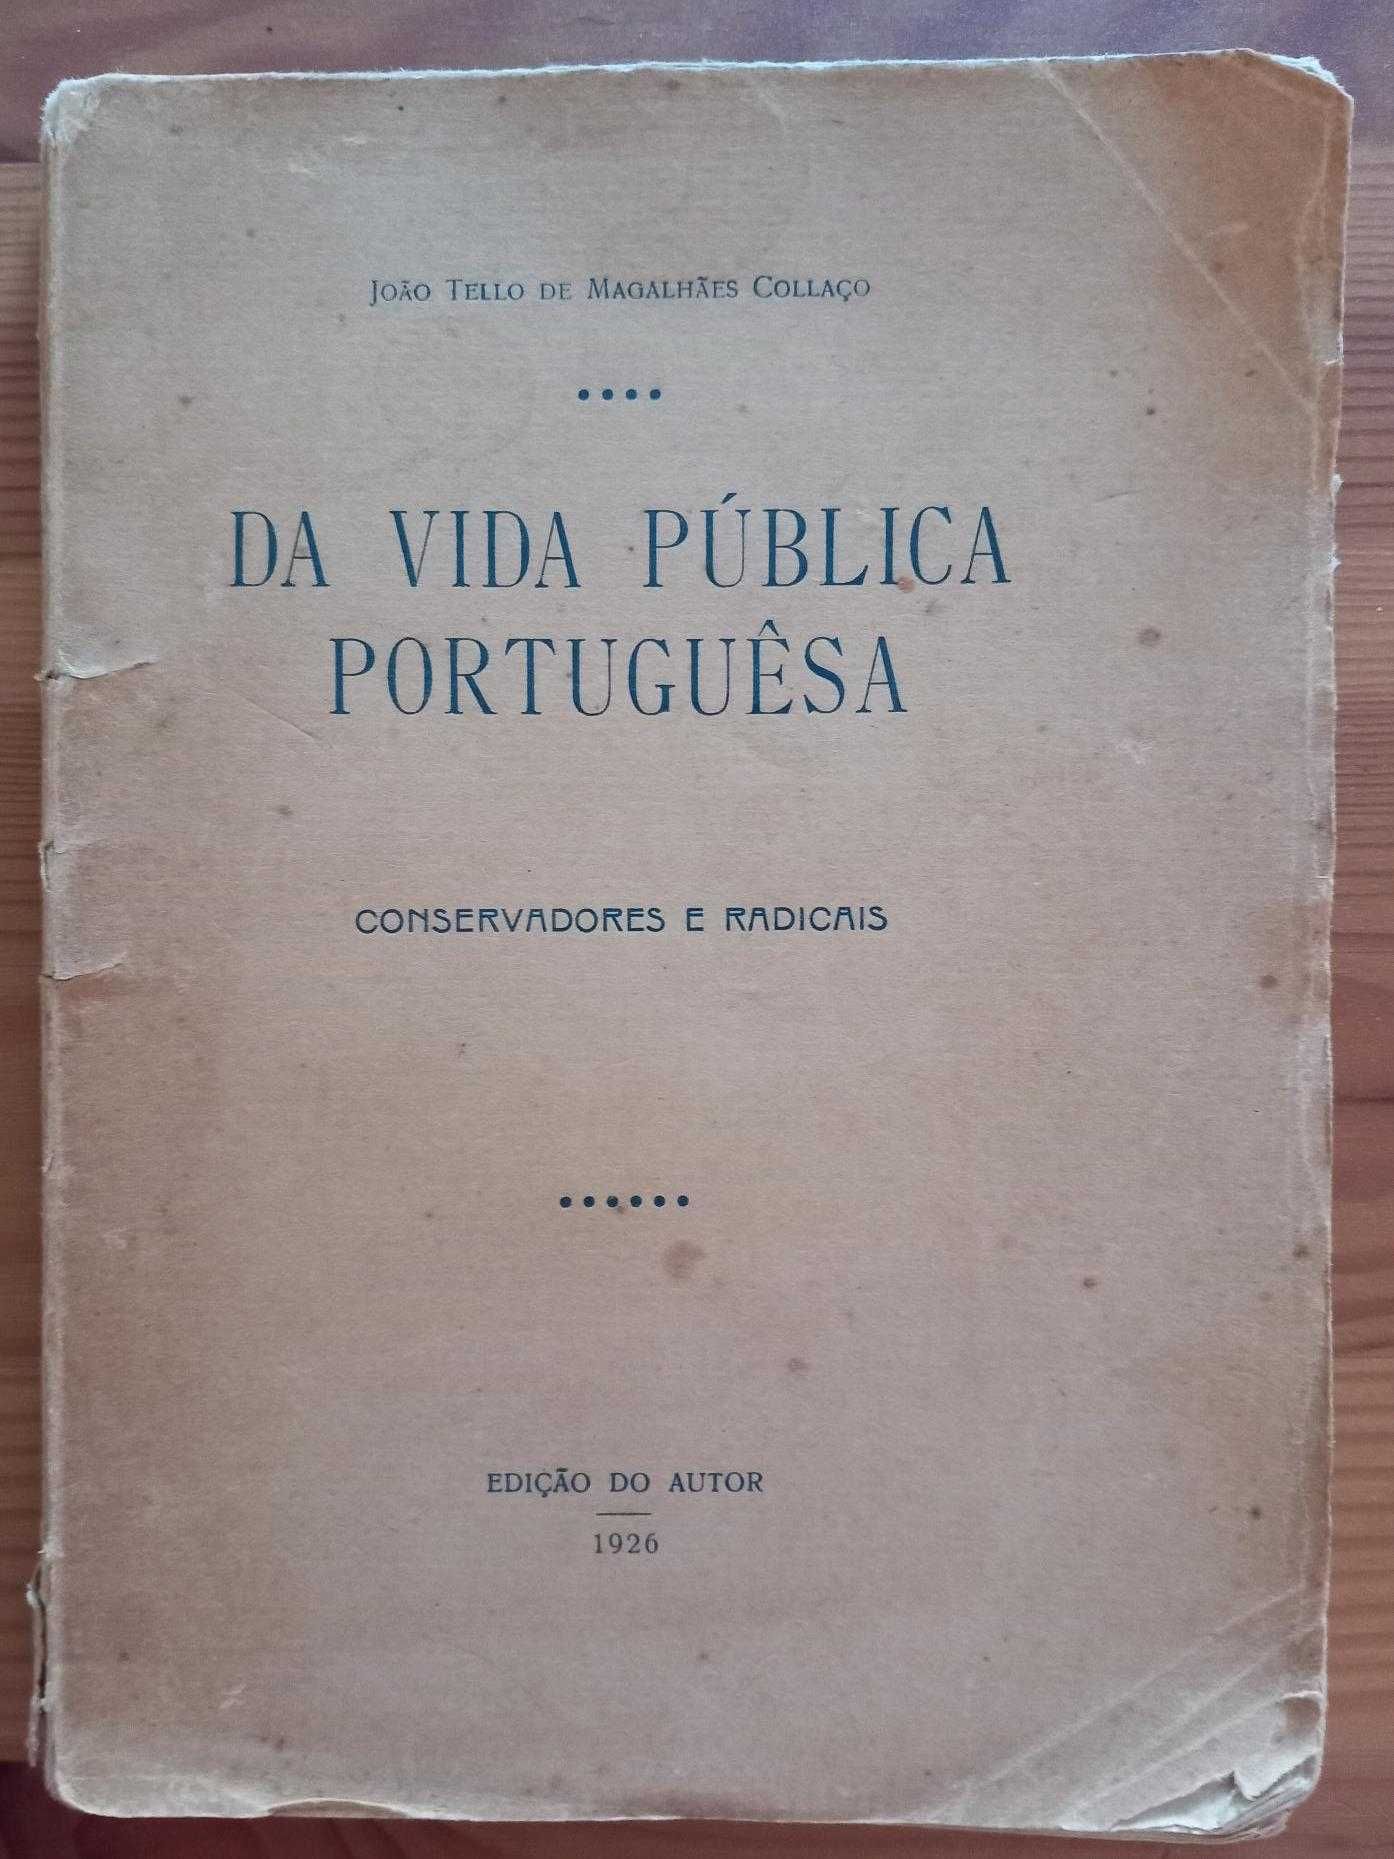 Da vida pública portuguesa. Conservadores e radicais